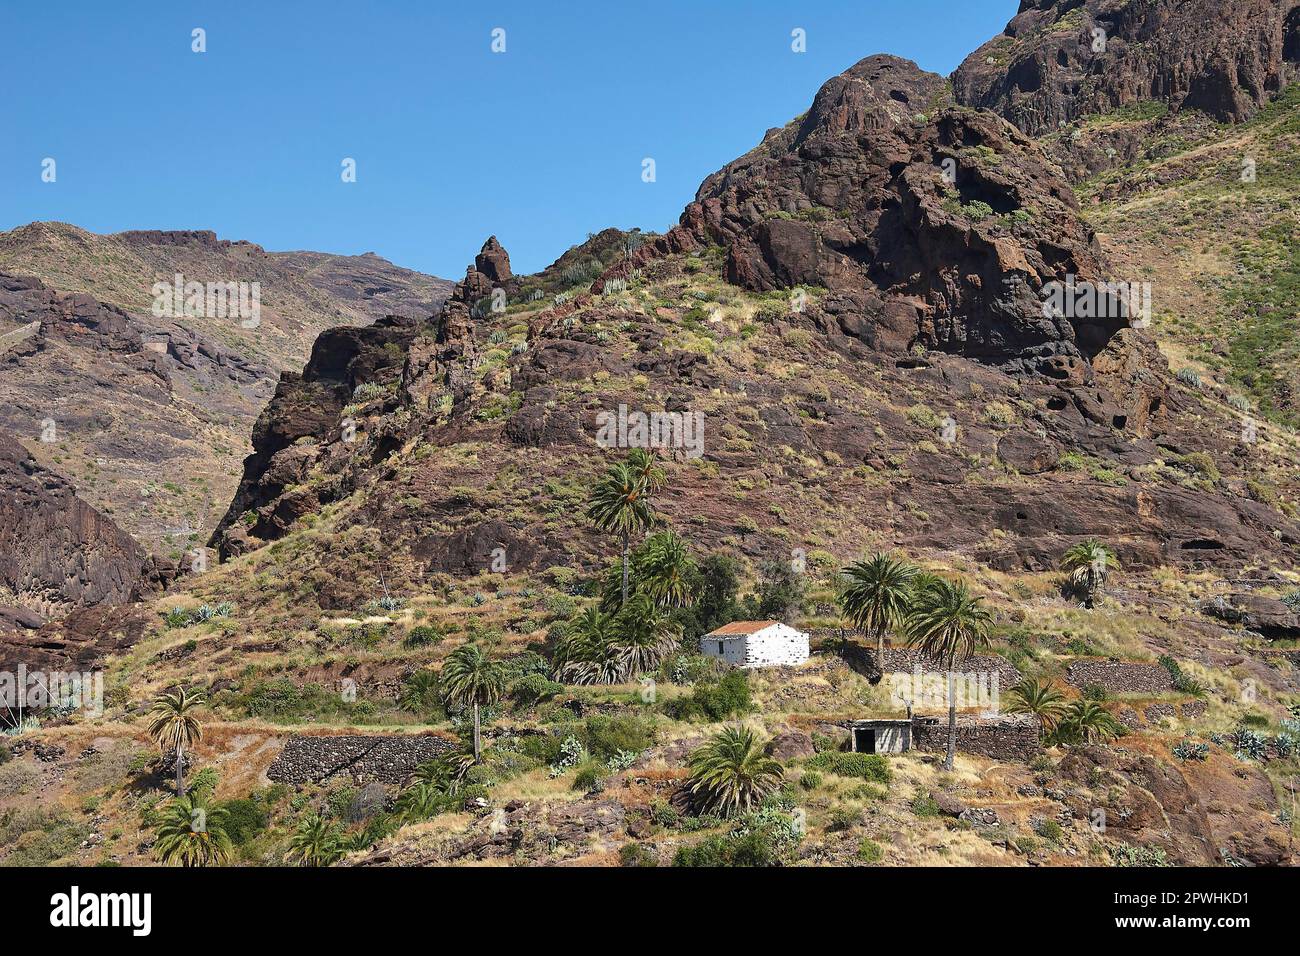 Finca, stone house, palm trees, green hill, blue cloudless sky, Barranco de la Aldea, gorge, Gran Canaria, Canary Islands, Spain Stock Photo